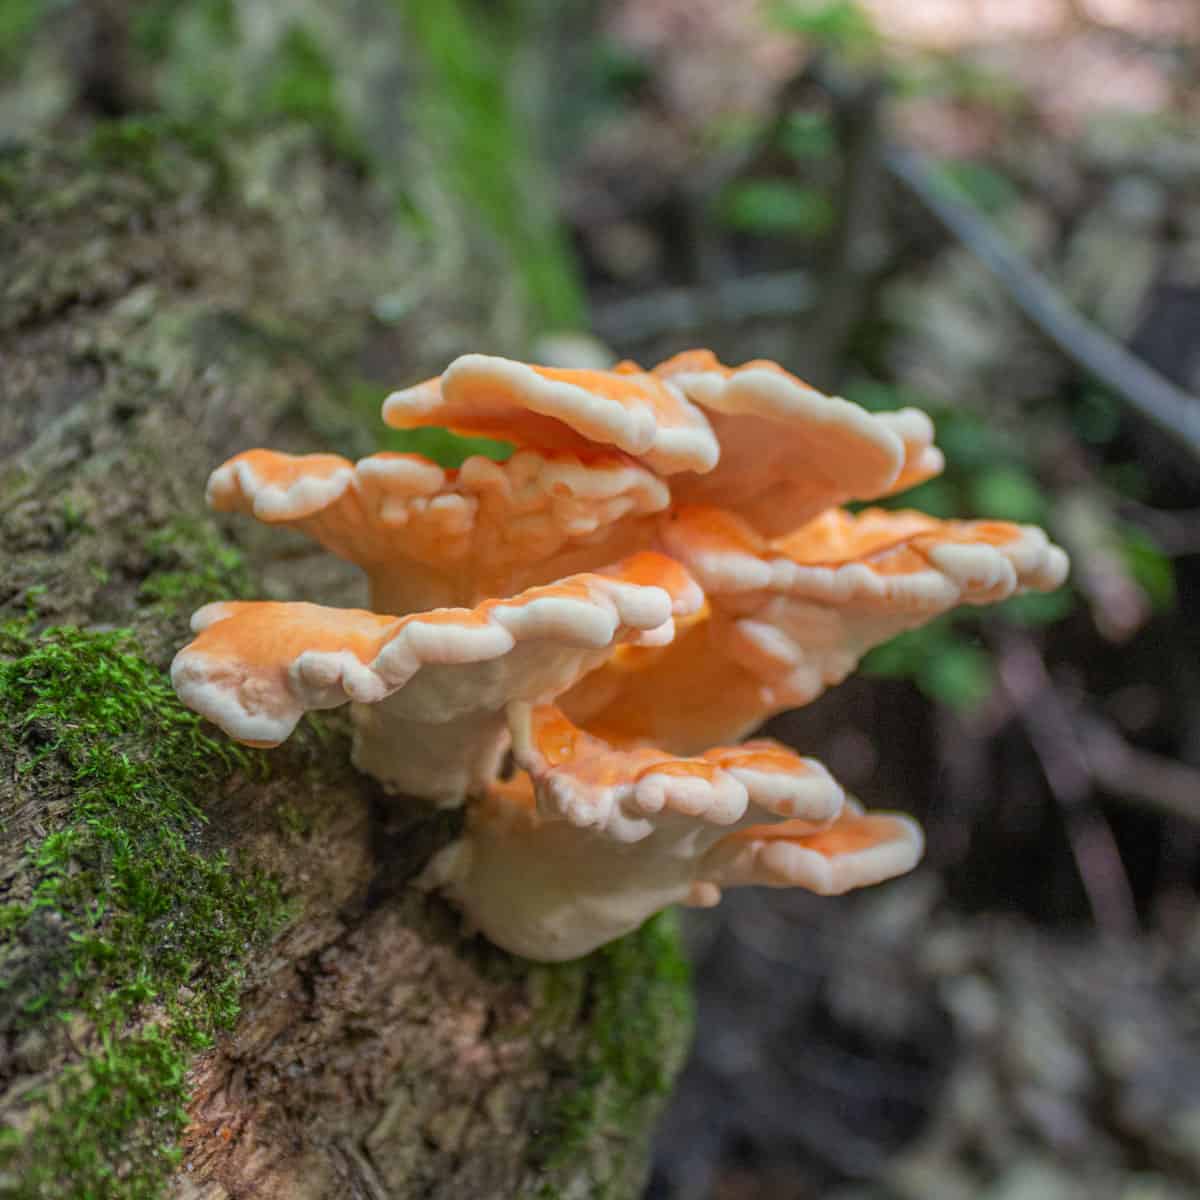 Chicken mushroom laetiporus cincinnatus